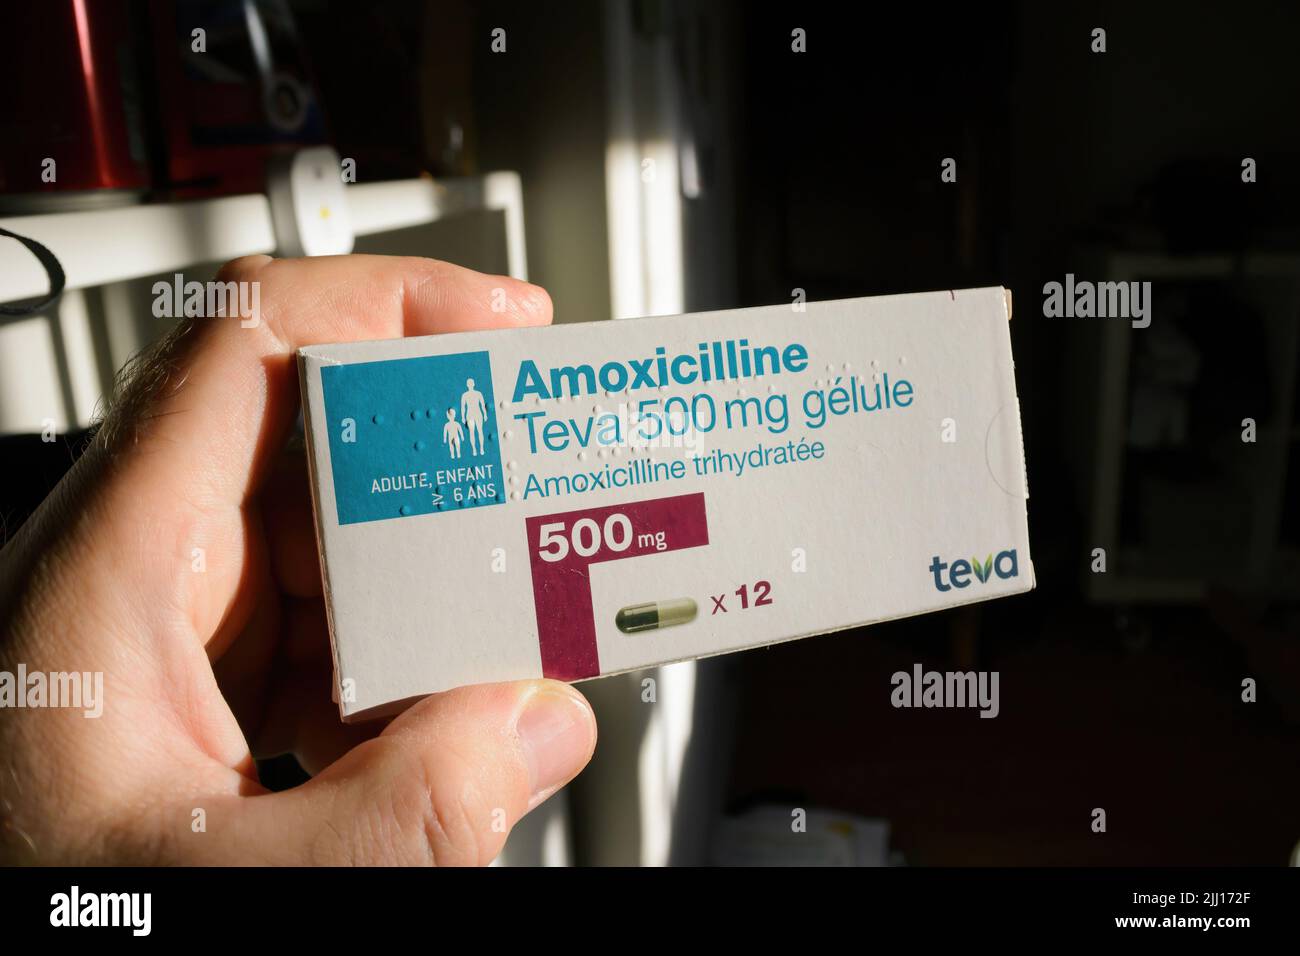 amoxicilline teva generique